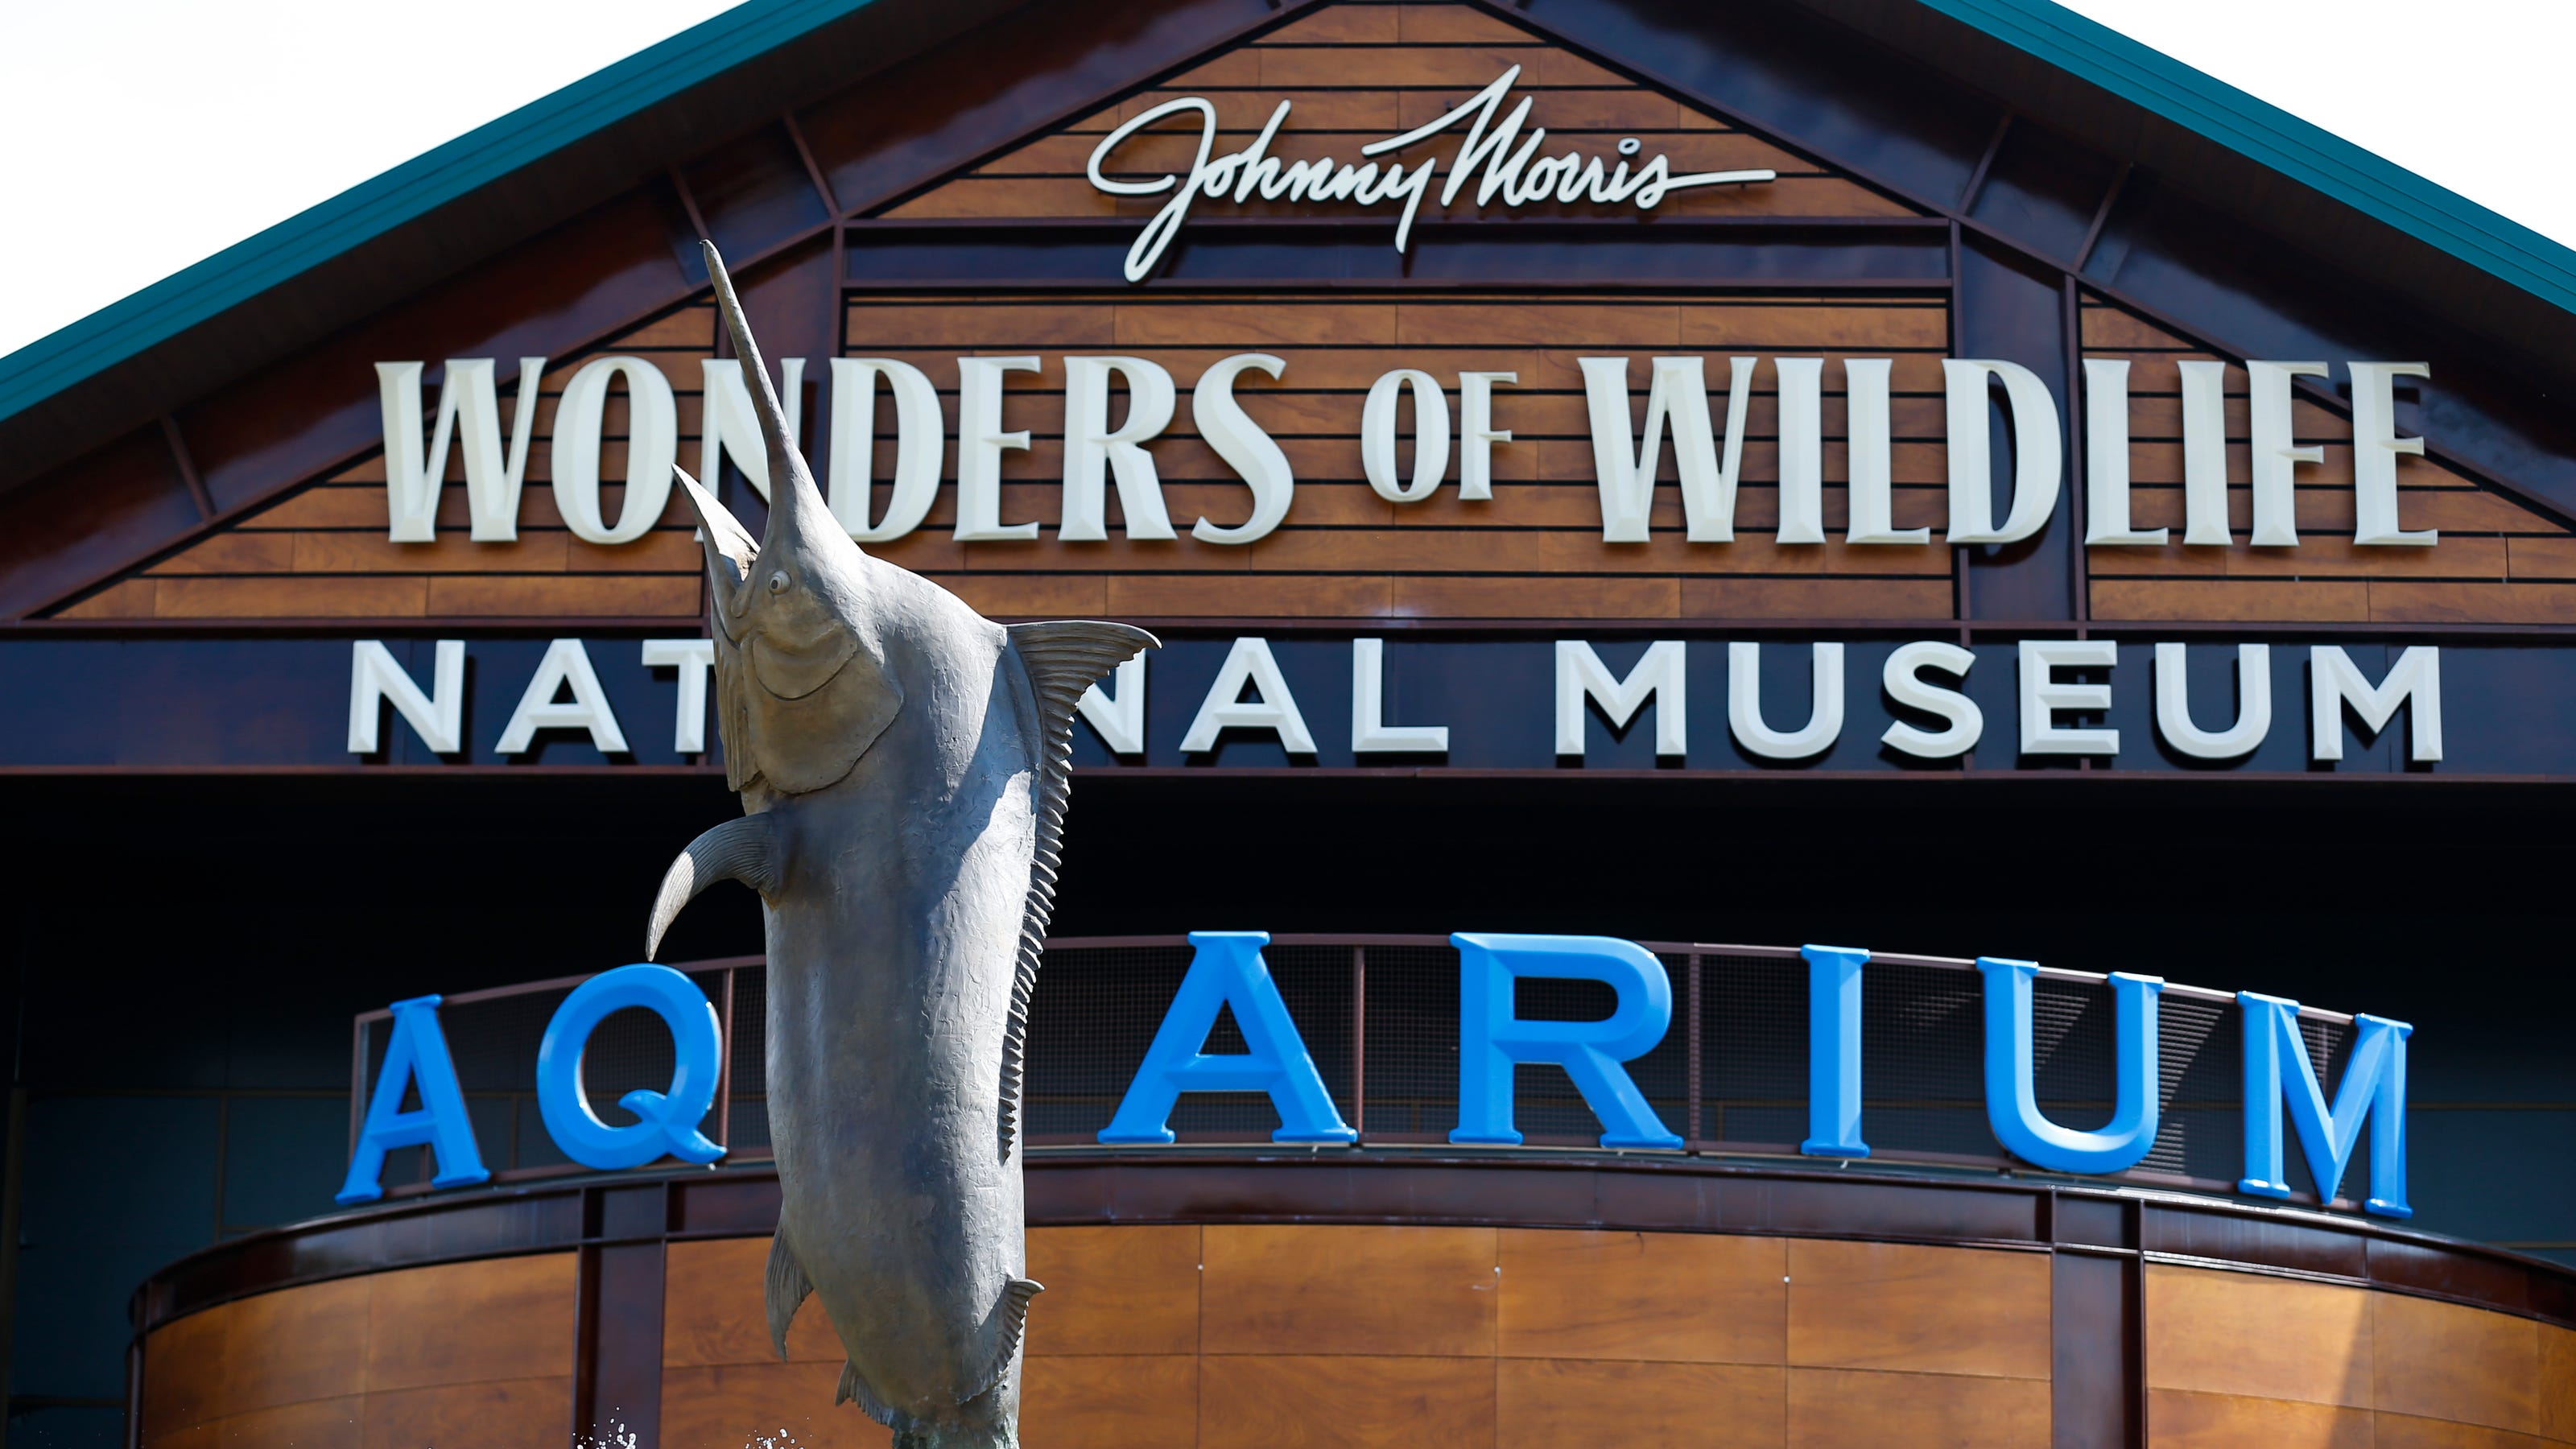 Wonders of Wildlife museum voted Best Aquarium by USA TODAY readers